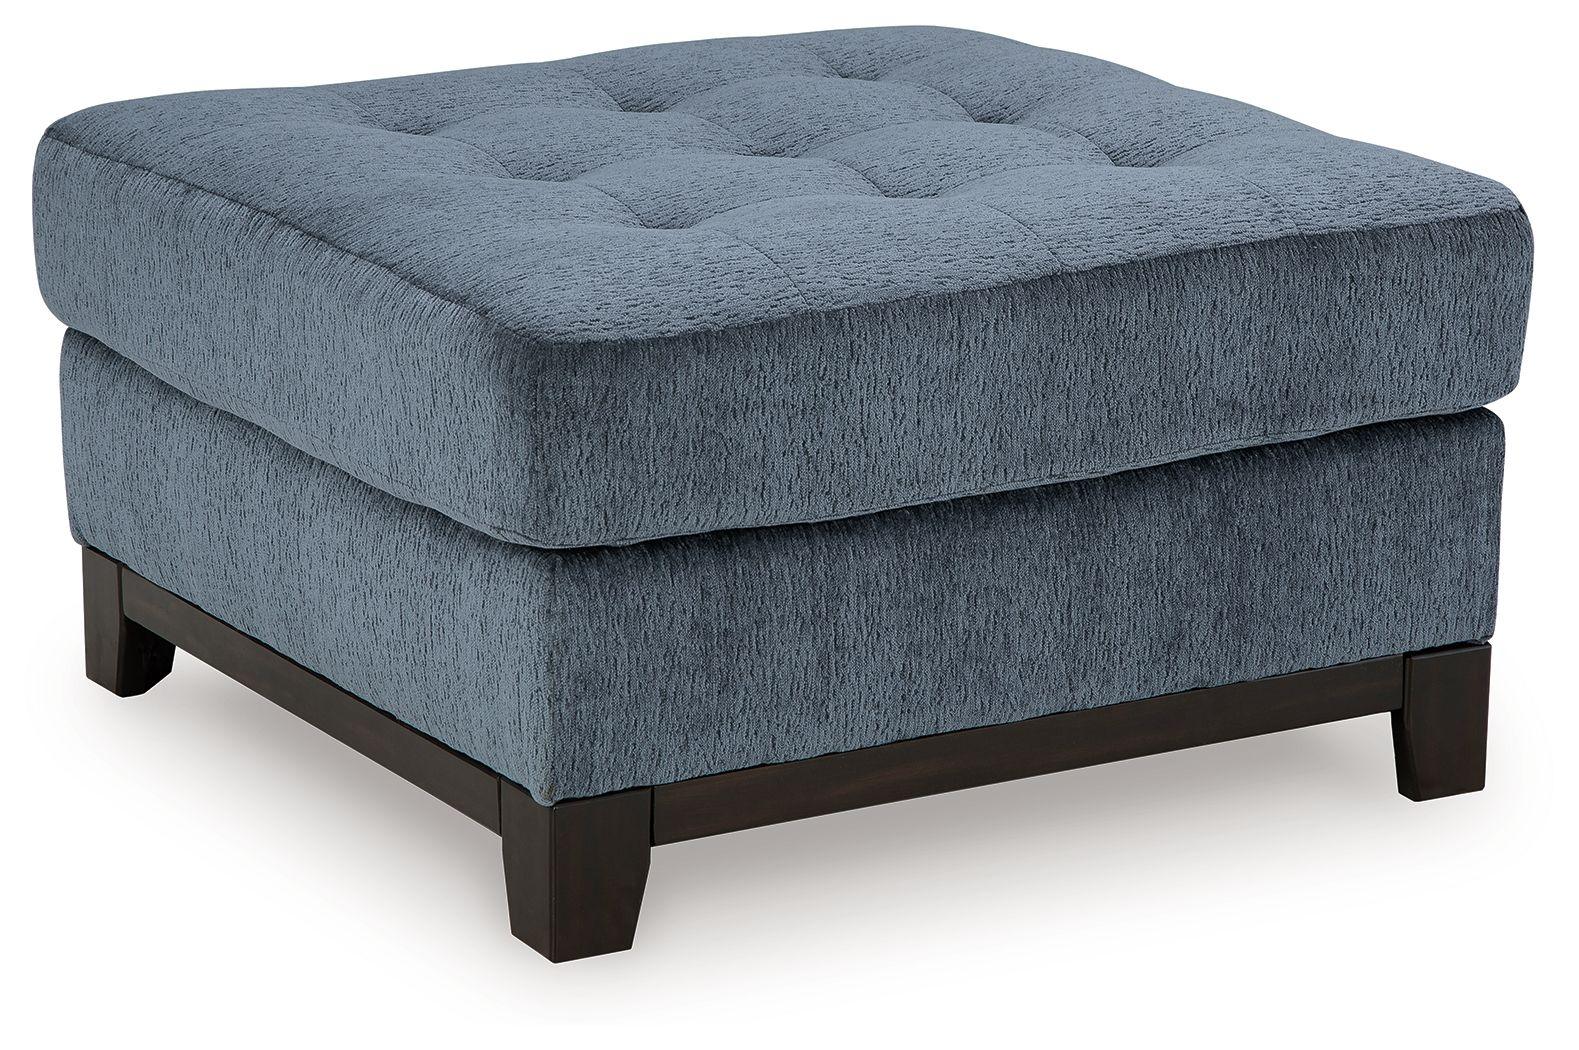 Benchcraft® - Maxon Place - Oversized Accent Ottoman - 5th Avenue Furniture